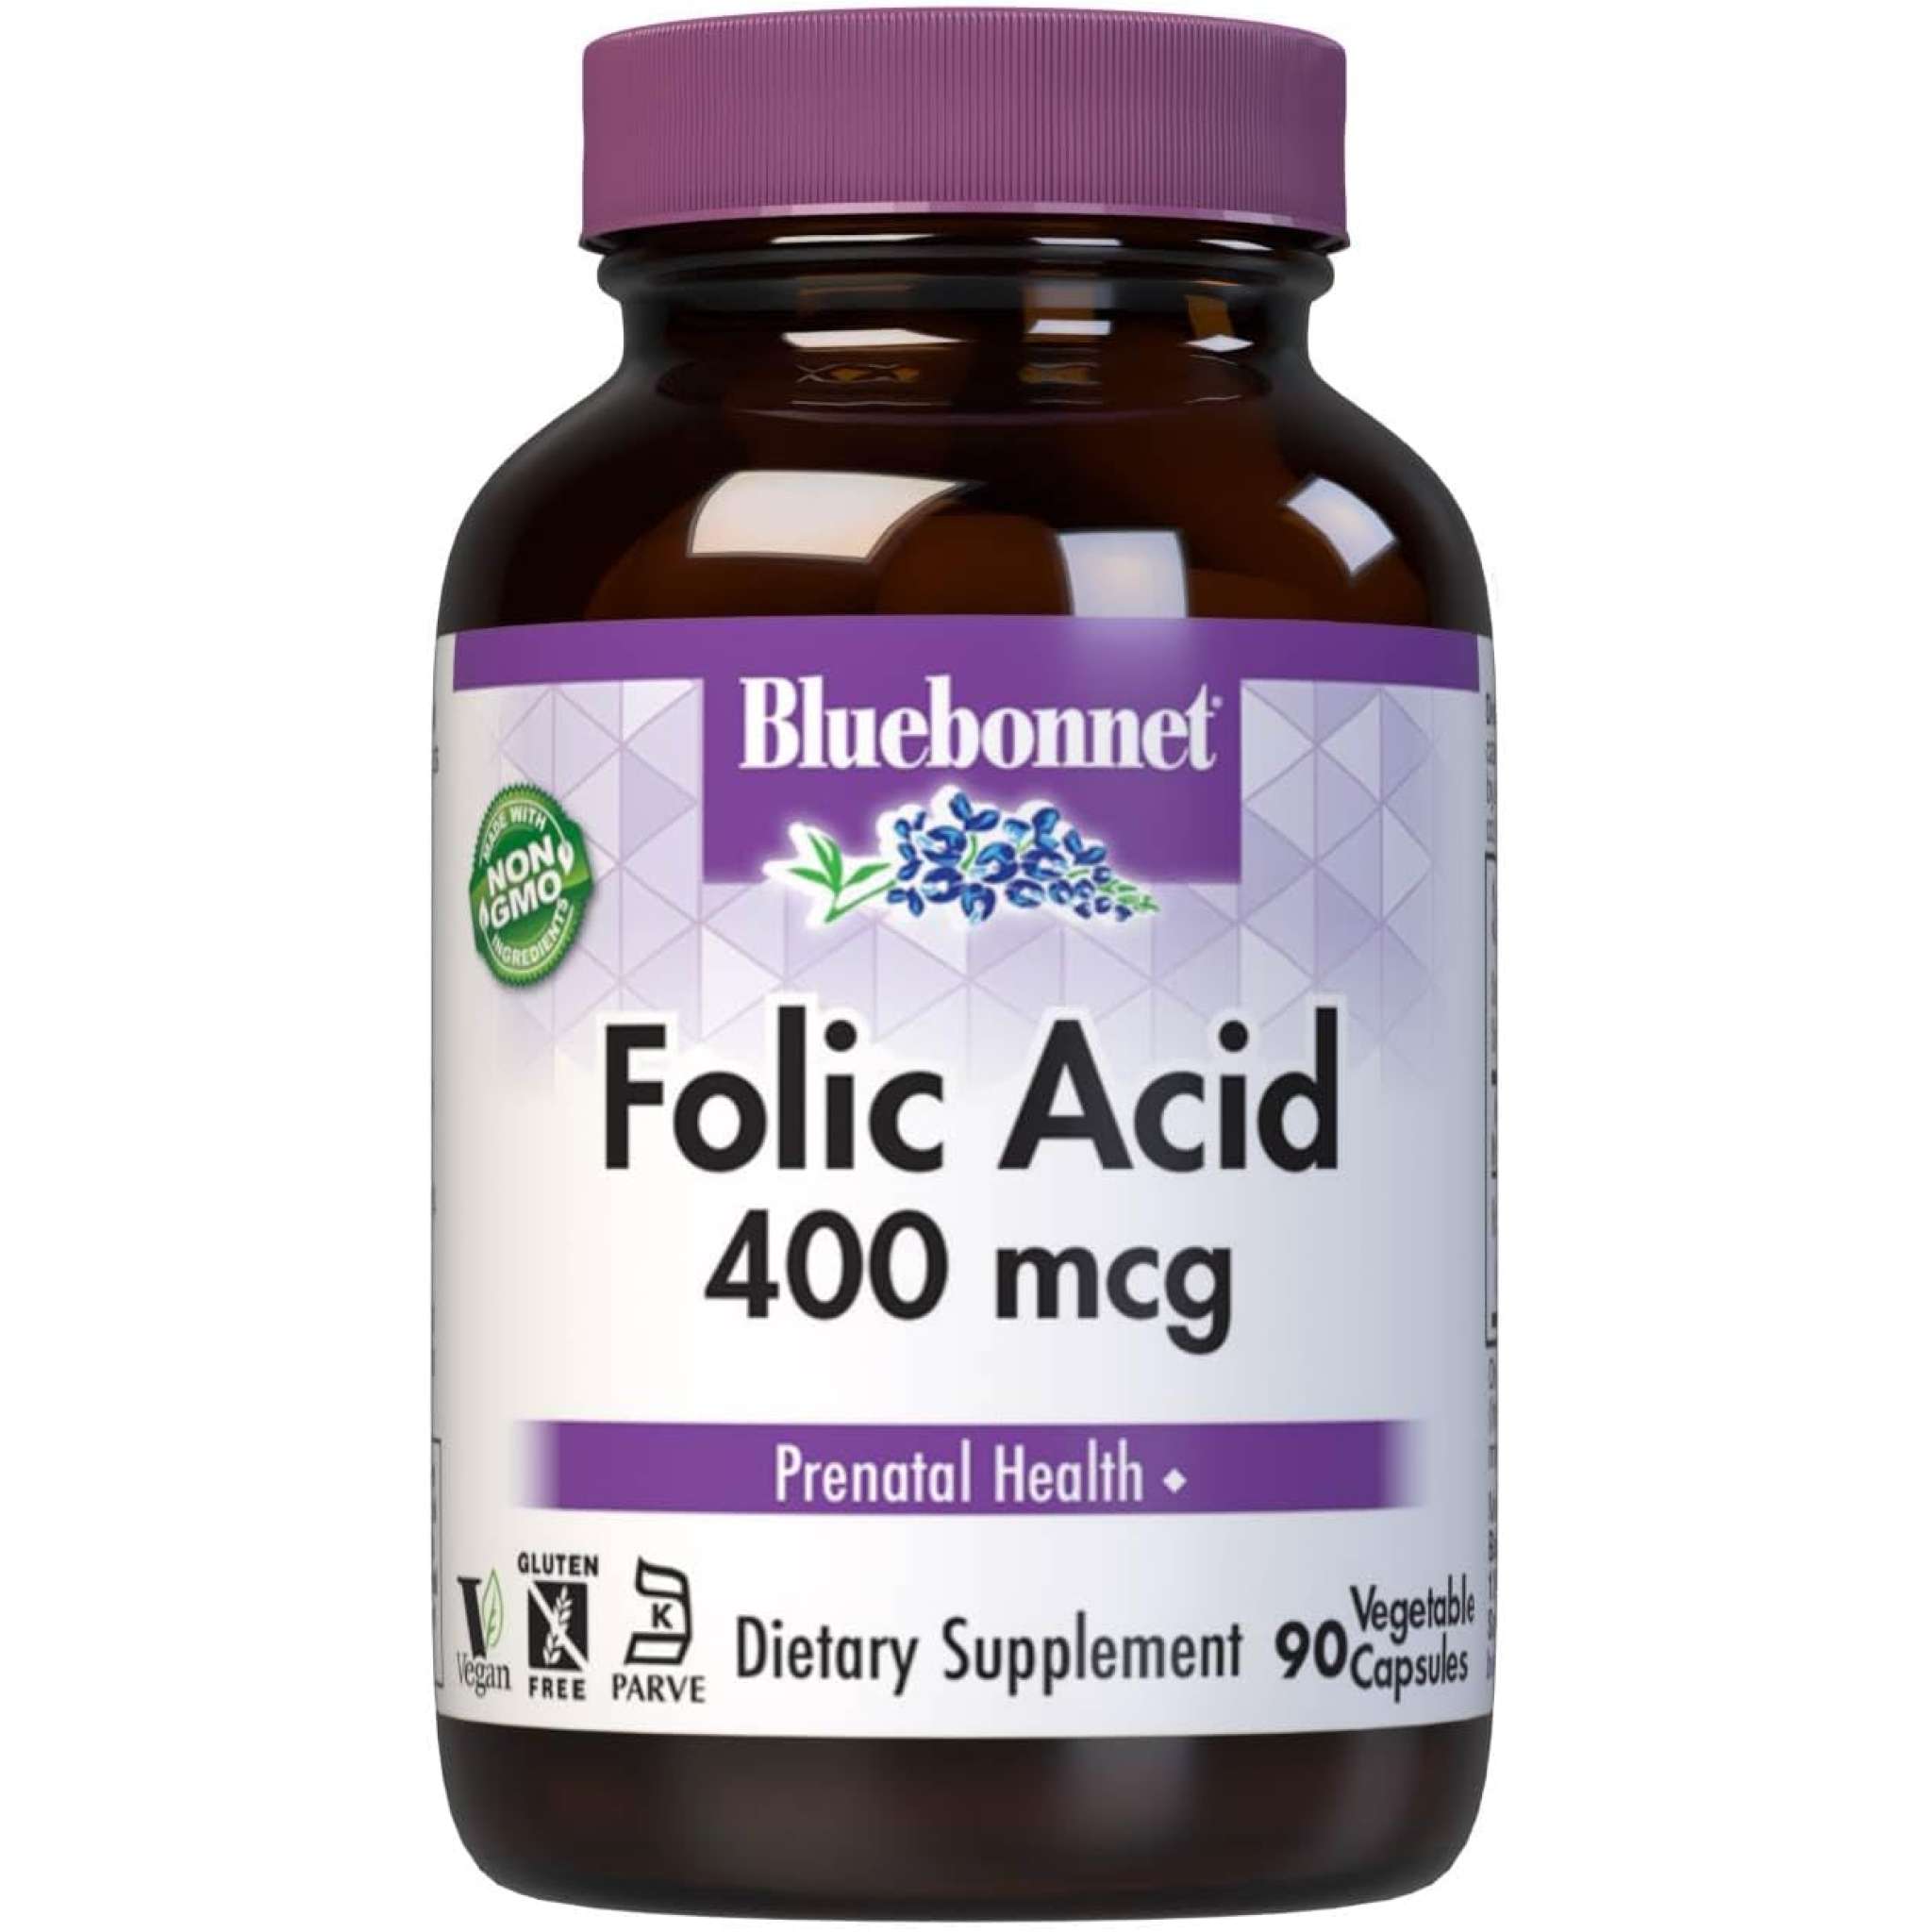 Bluebonnet - Folic Acid 400 mcg